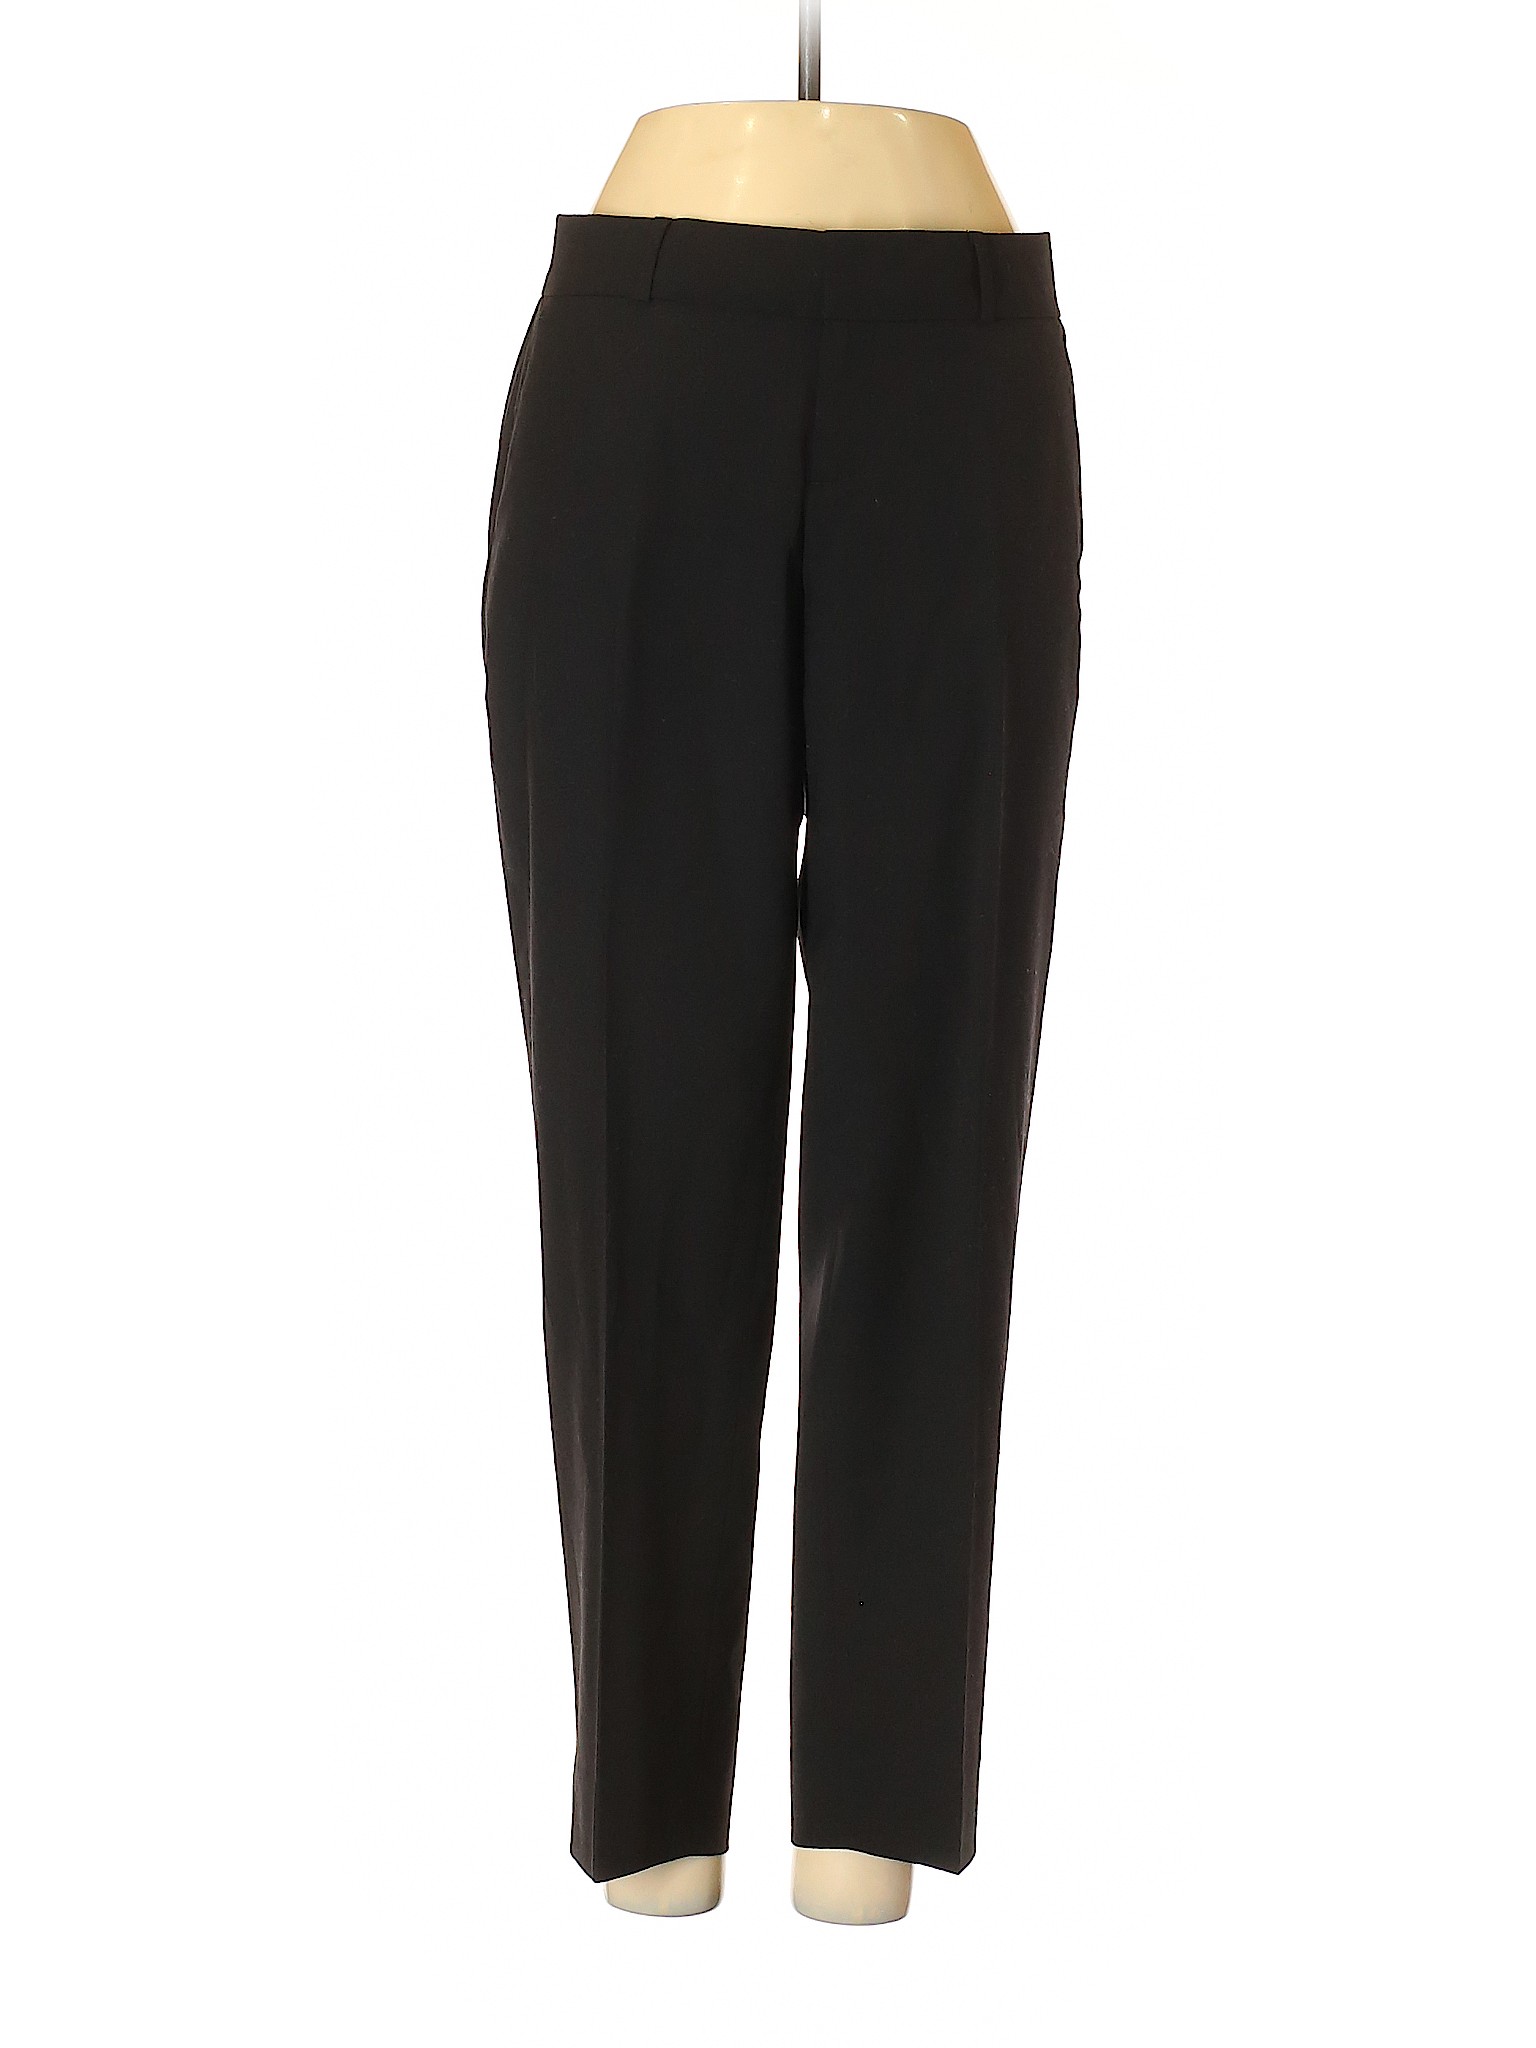 Banana Republic Women Black Dress Pants 0 Petites | eBay